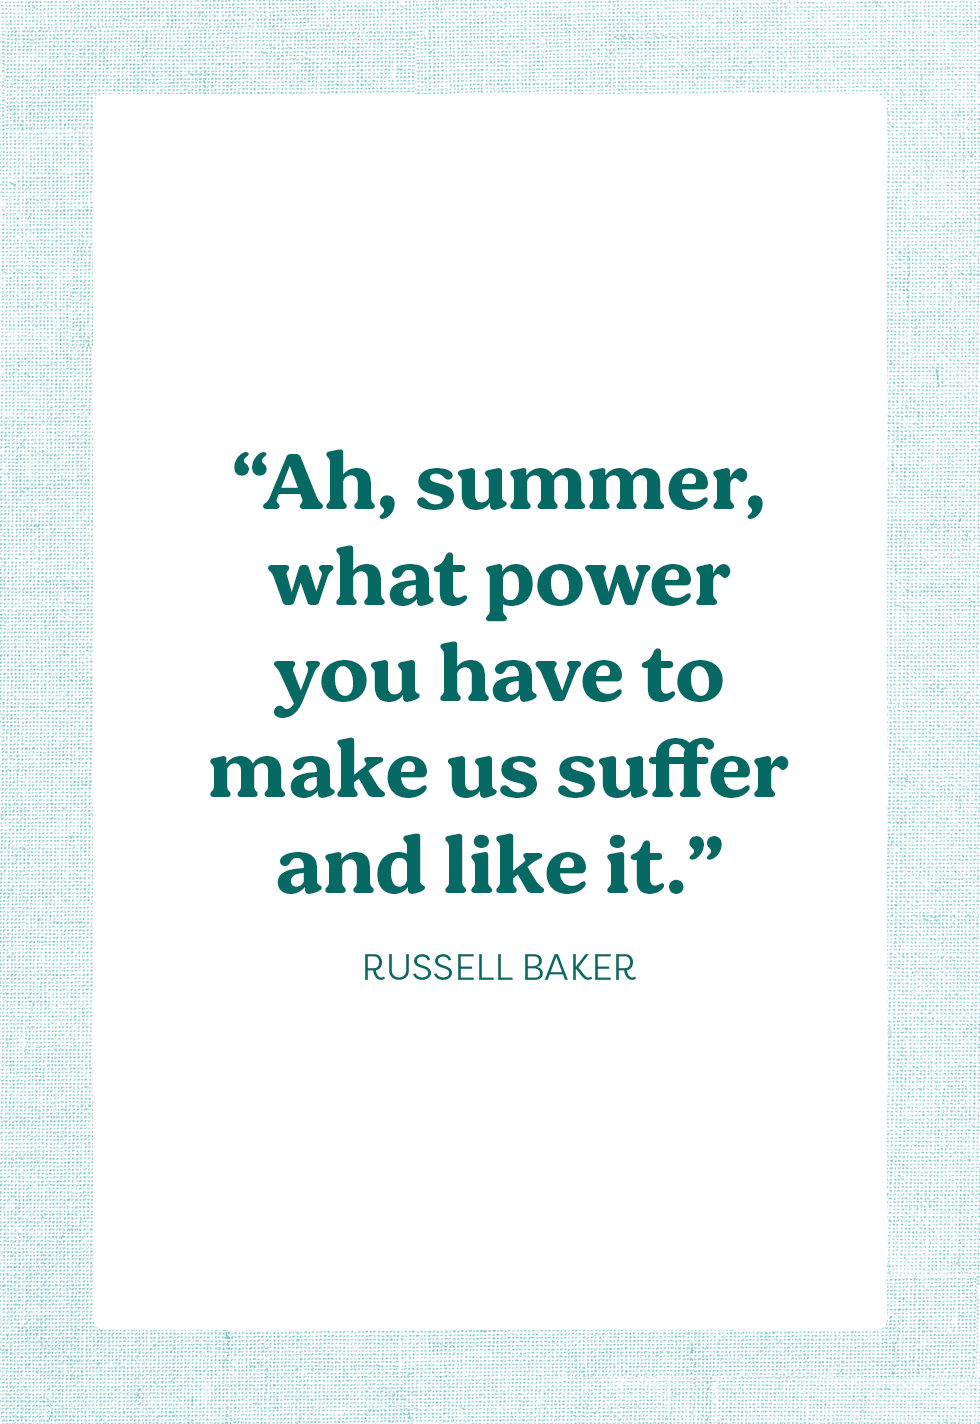 best summer quotes